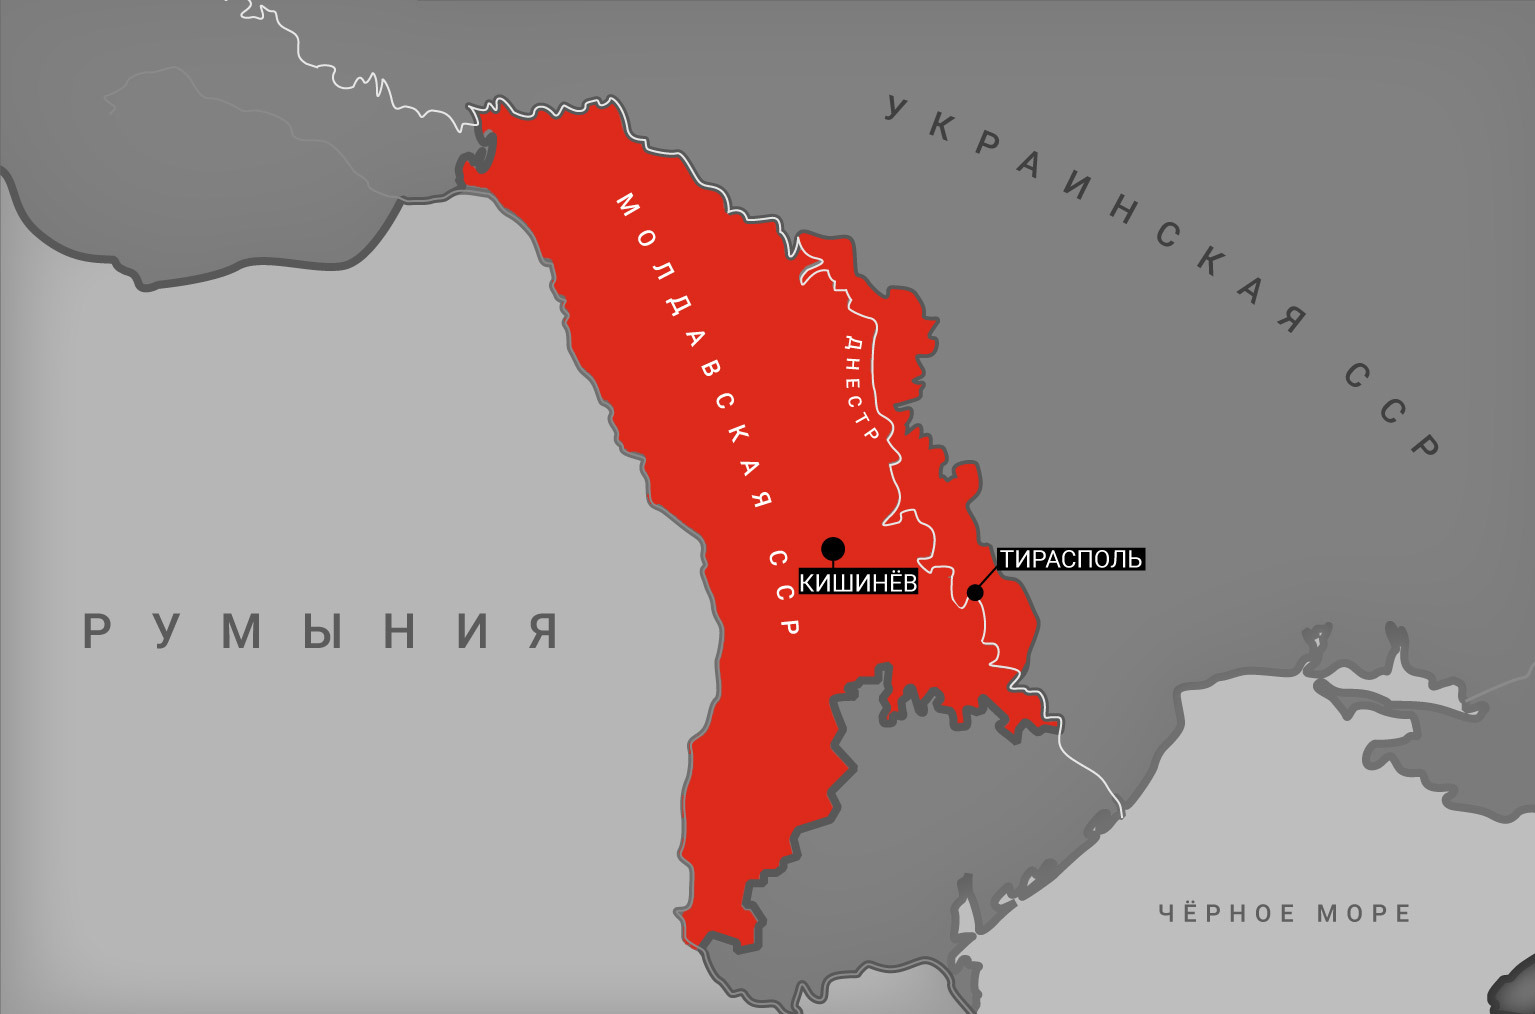 Молдавия это страна. Карта Молдавии и Приднестровья. Молдавия и ПМР на карте. Карта Молдавии и ПМР 1940. Приднестровье на карте с границами.